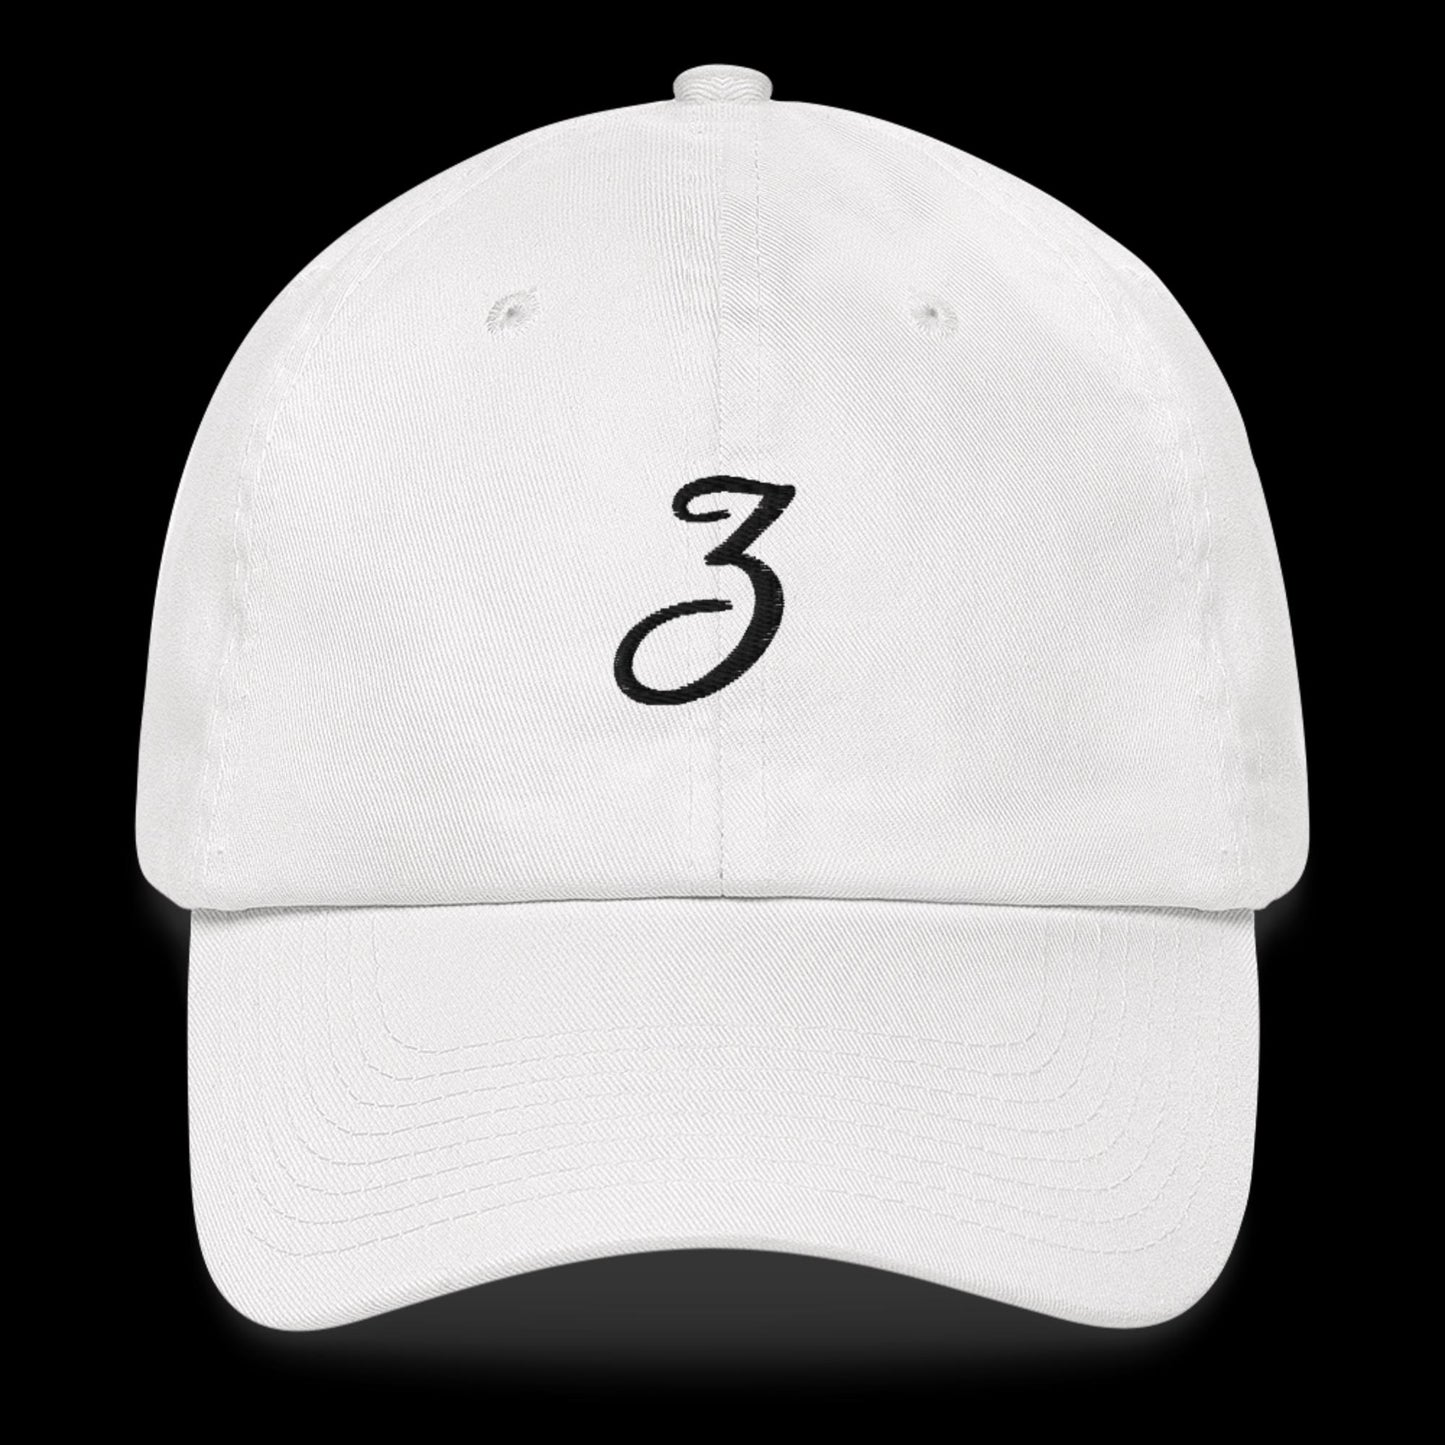 Zoesta white cap